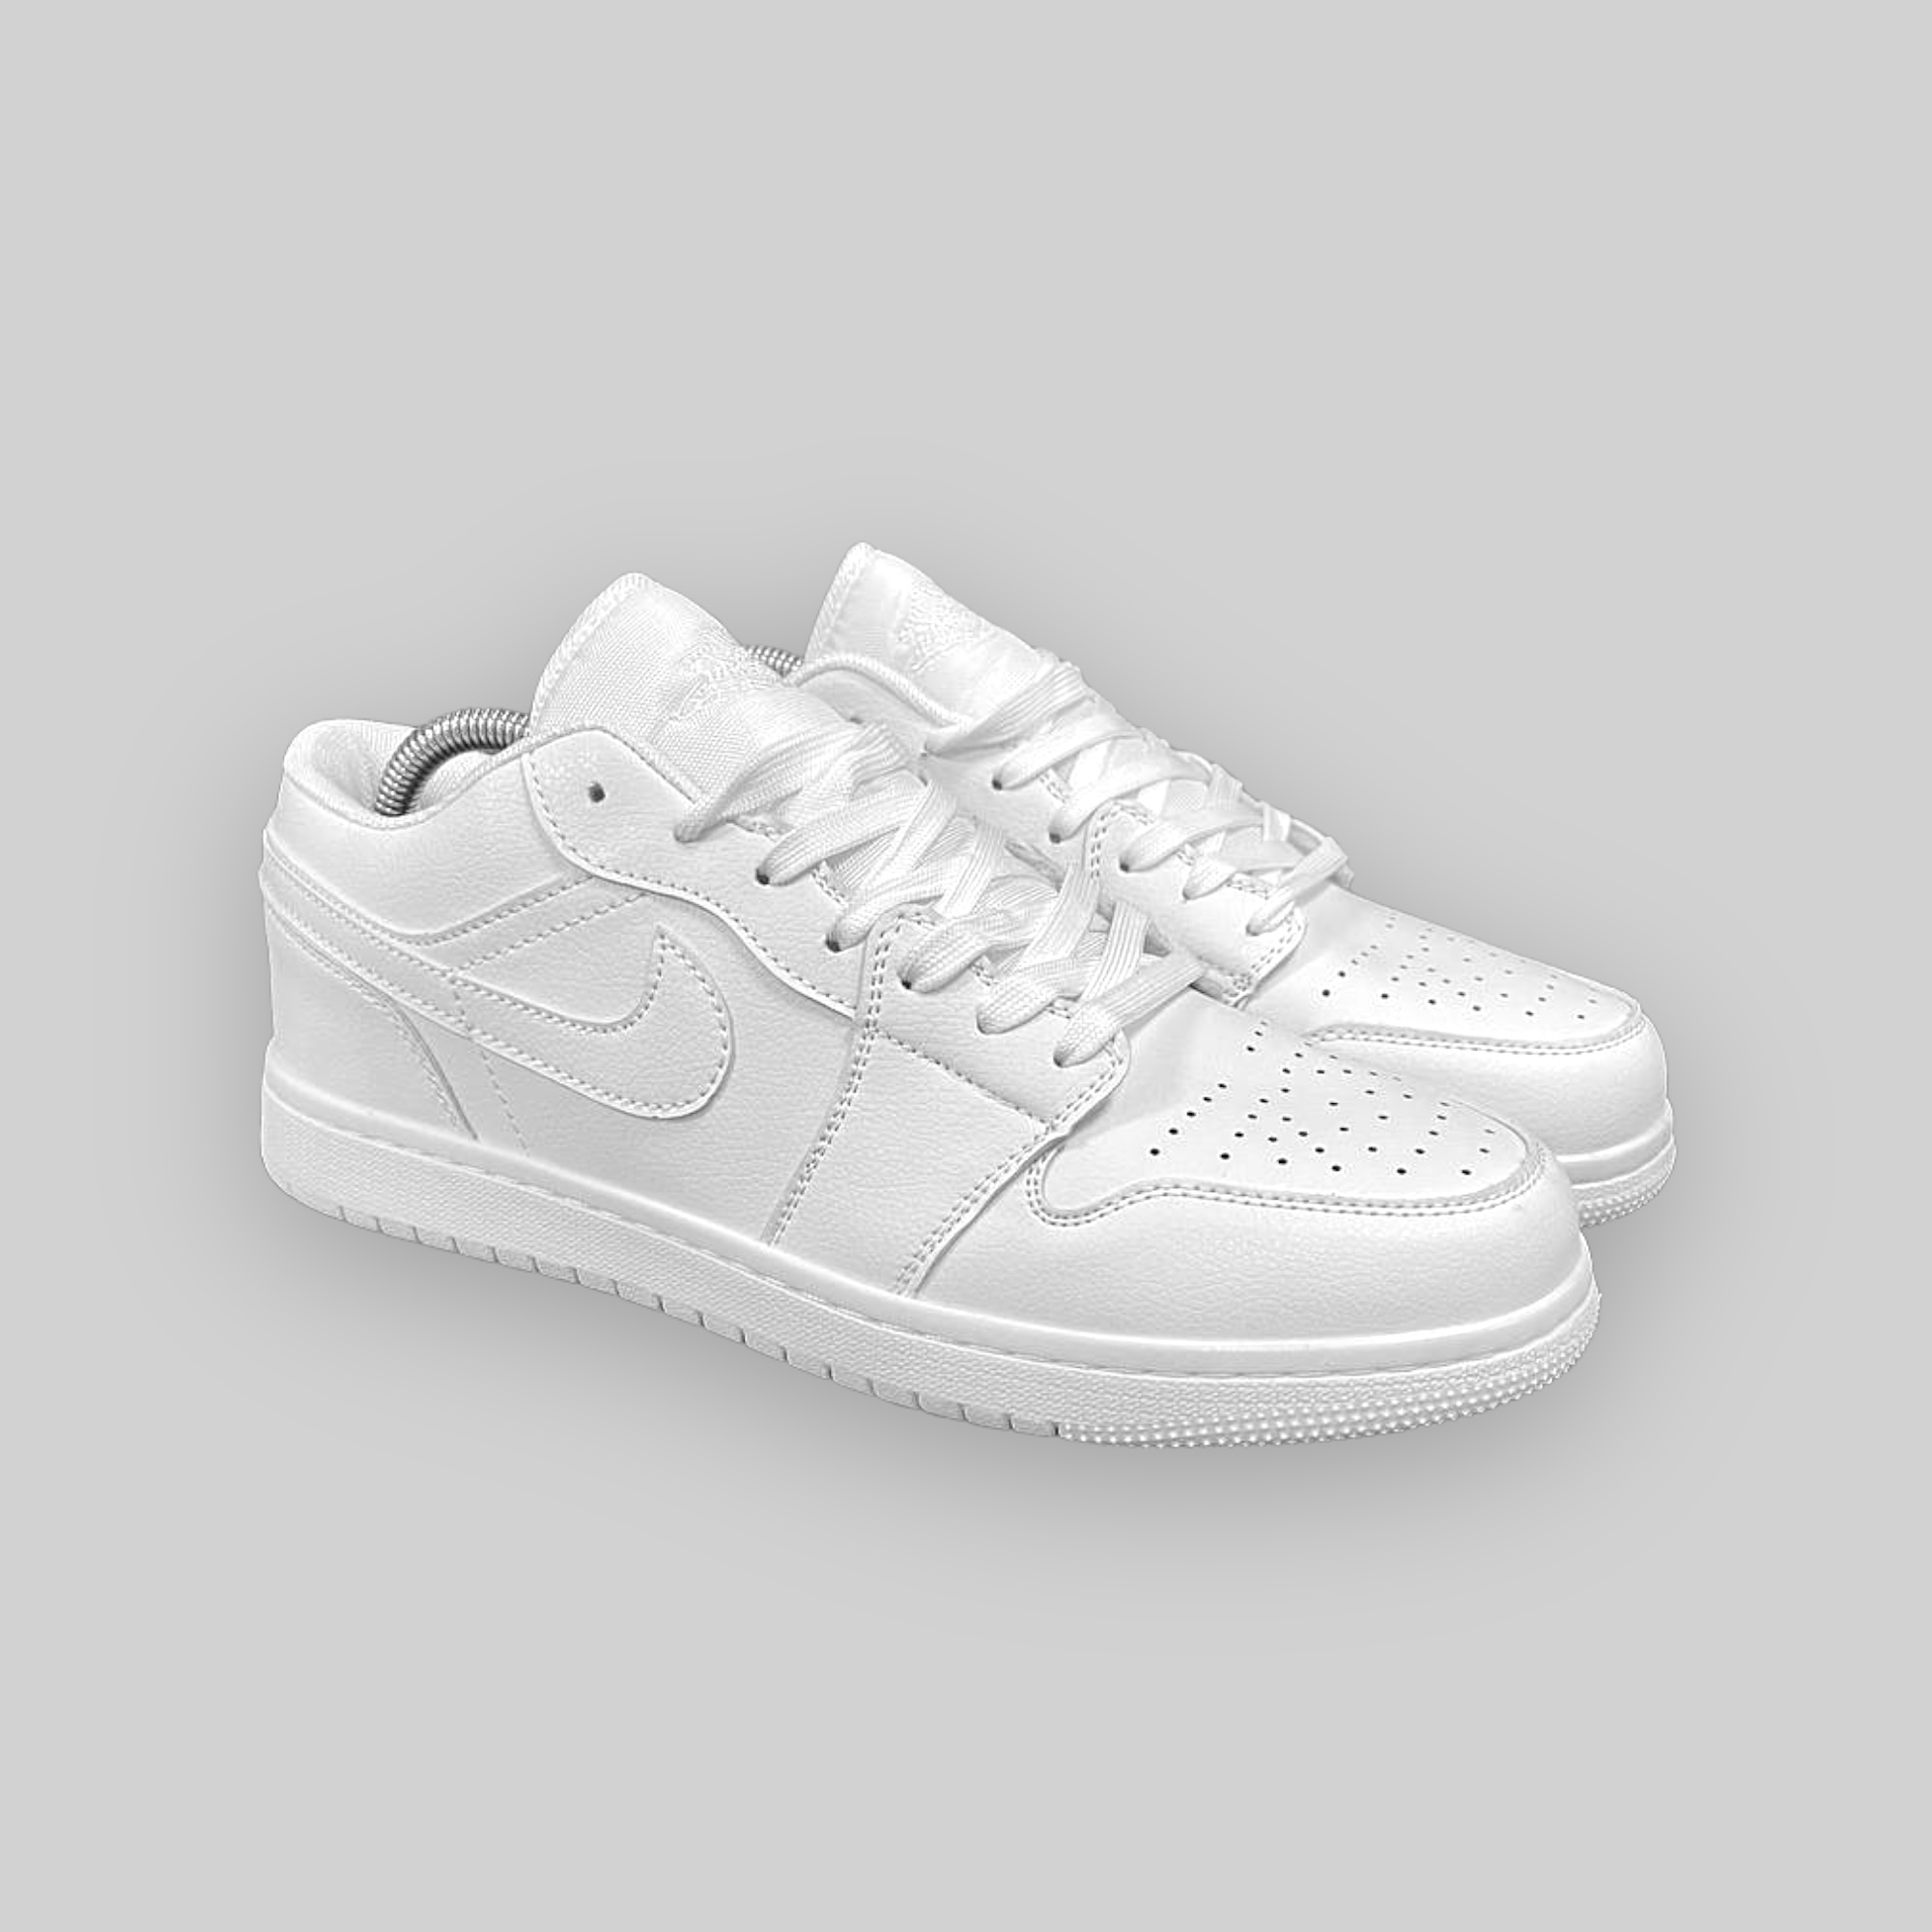 Nike Air Jordan 1 low White